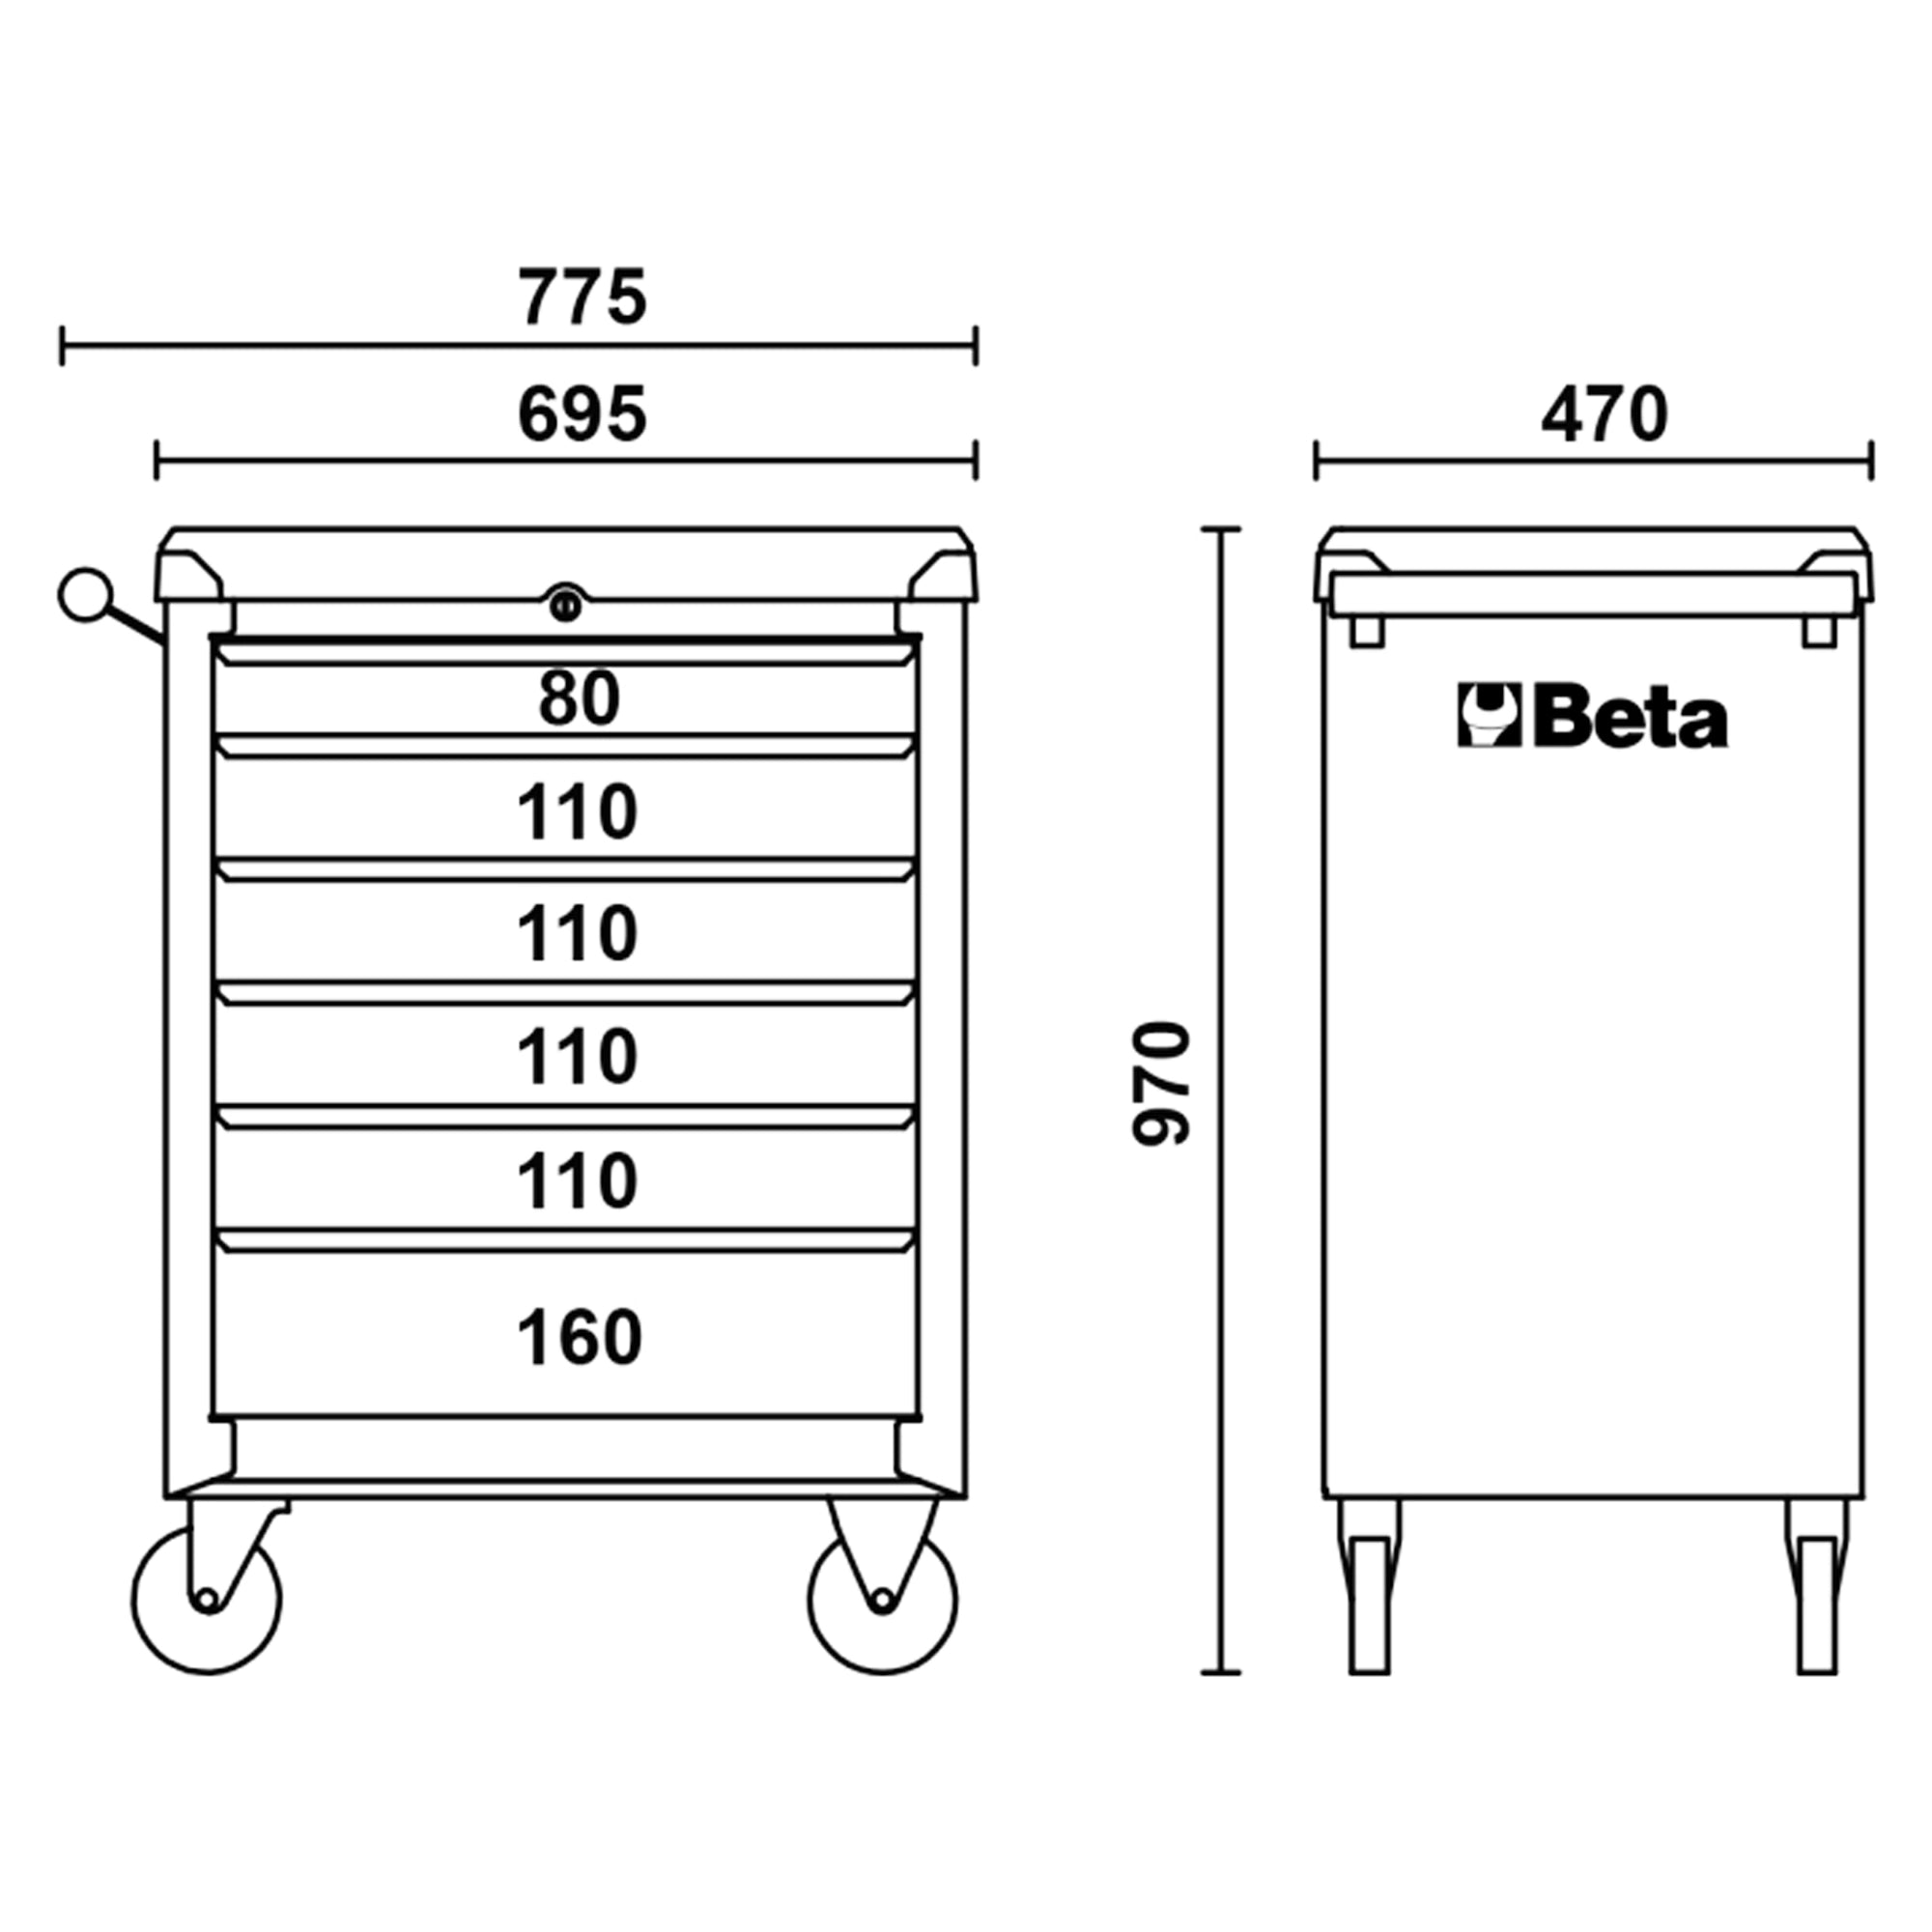 Cassettiera Porta utensili Beta C04BOX-A VU